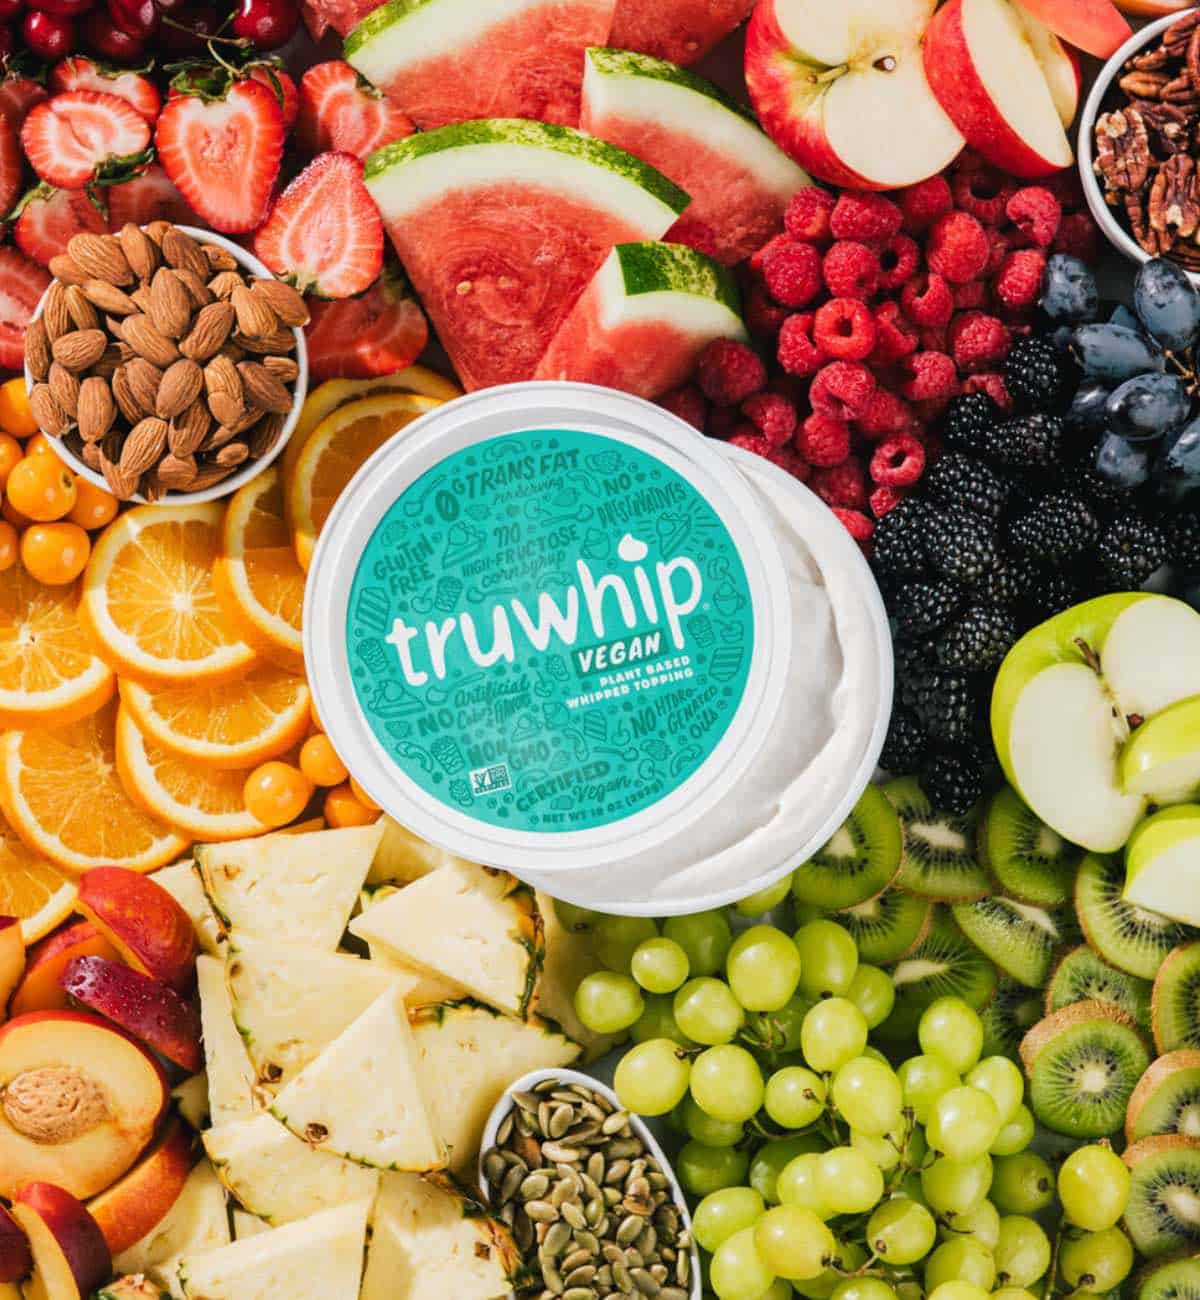 Fruit platter with vegan whipped cream from the brand Truwhip. 